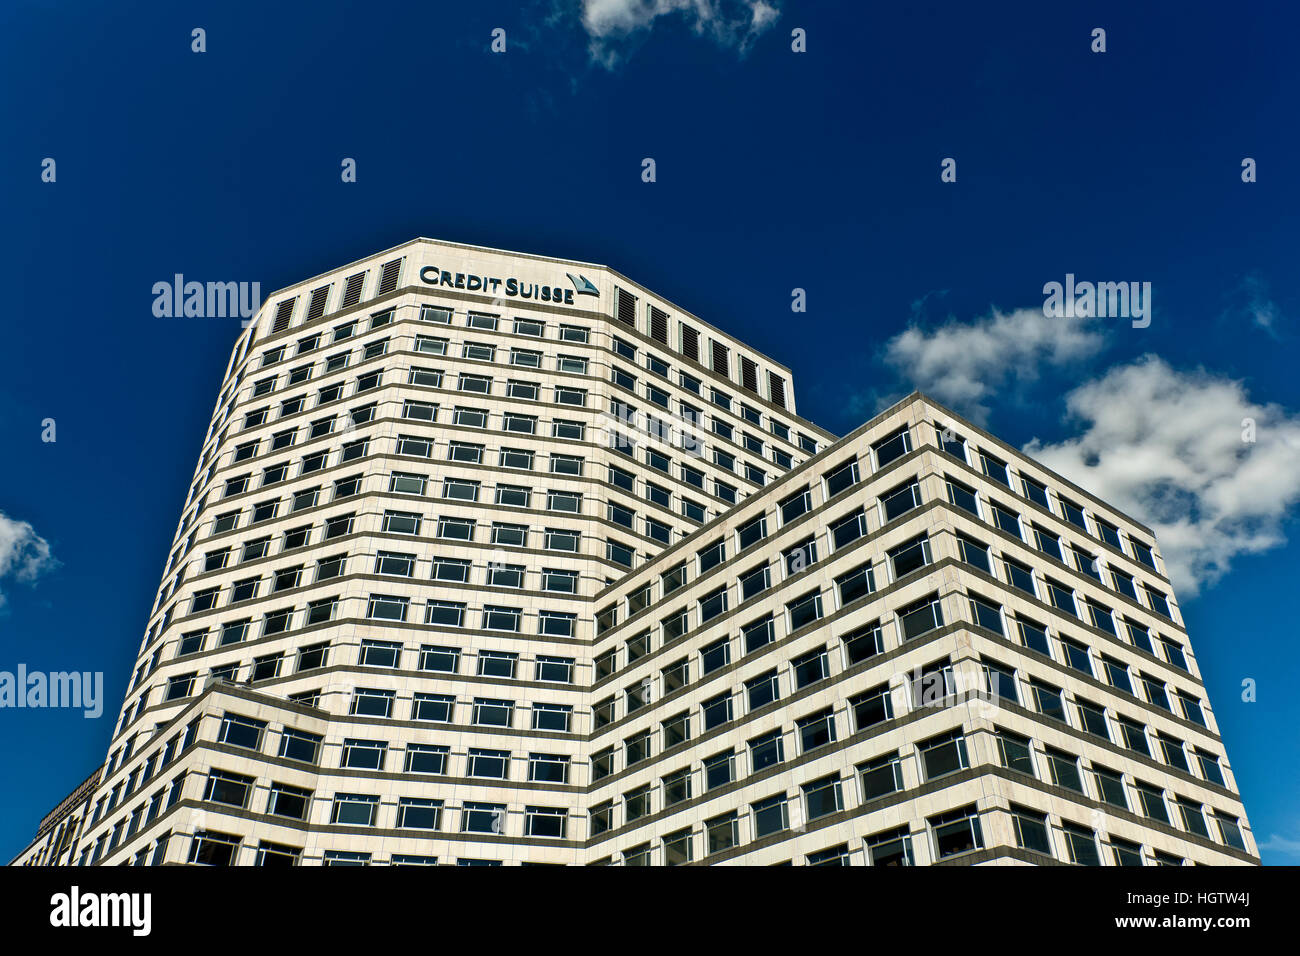 Il Credit Suisse banca uffici, Canary Wharf, il quartiere finanziario centrale. CBD Central Business District. Docklands Isle of Dogs. Londra, Inghilterra. Cielo blu Foto Stock